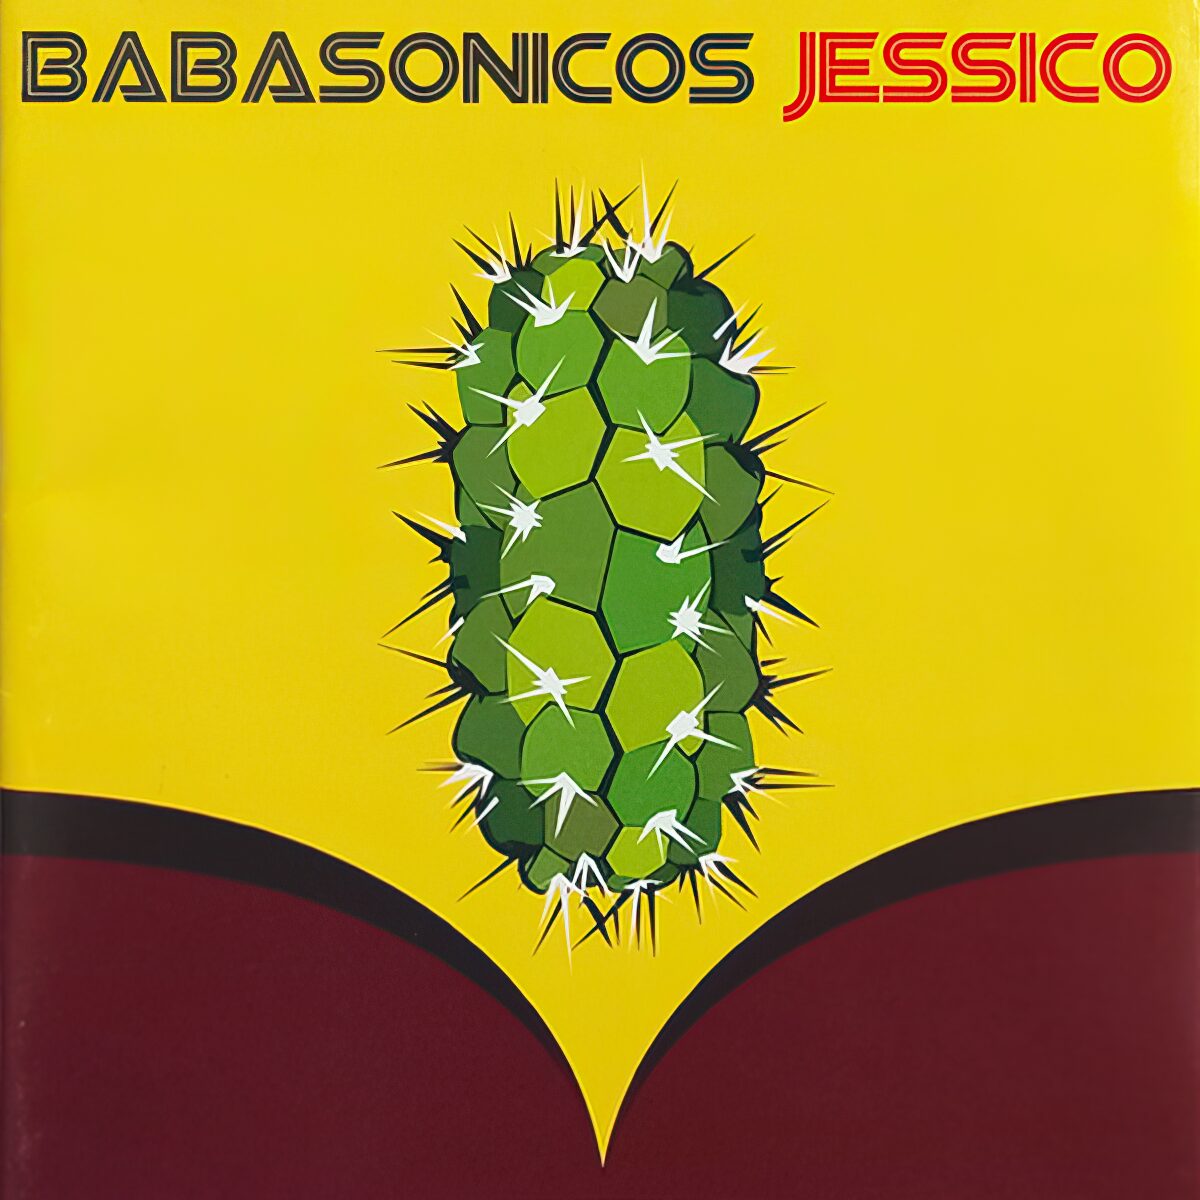 Babasonicos jessico